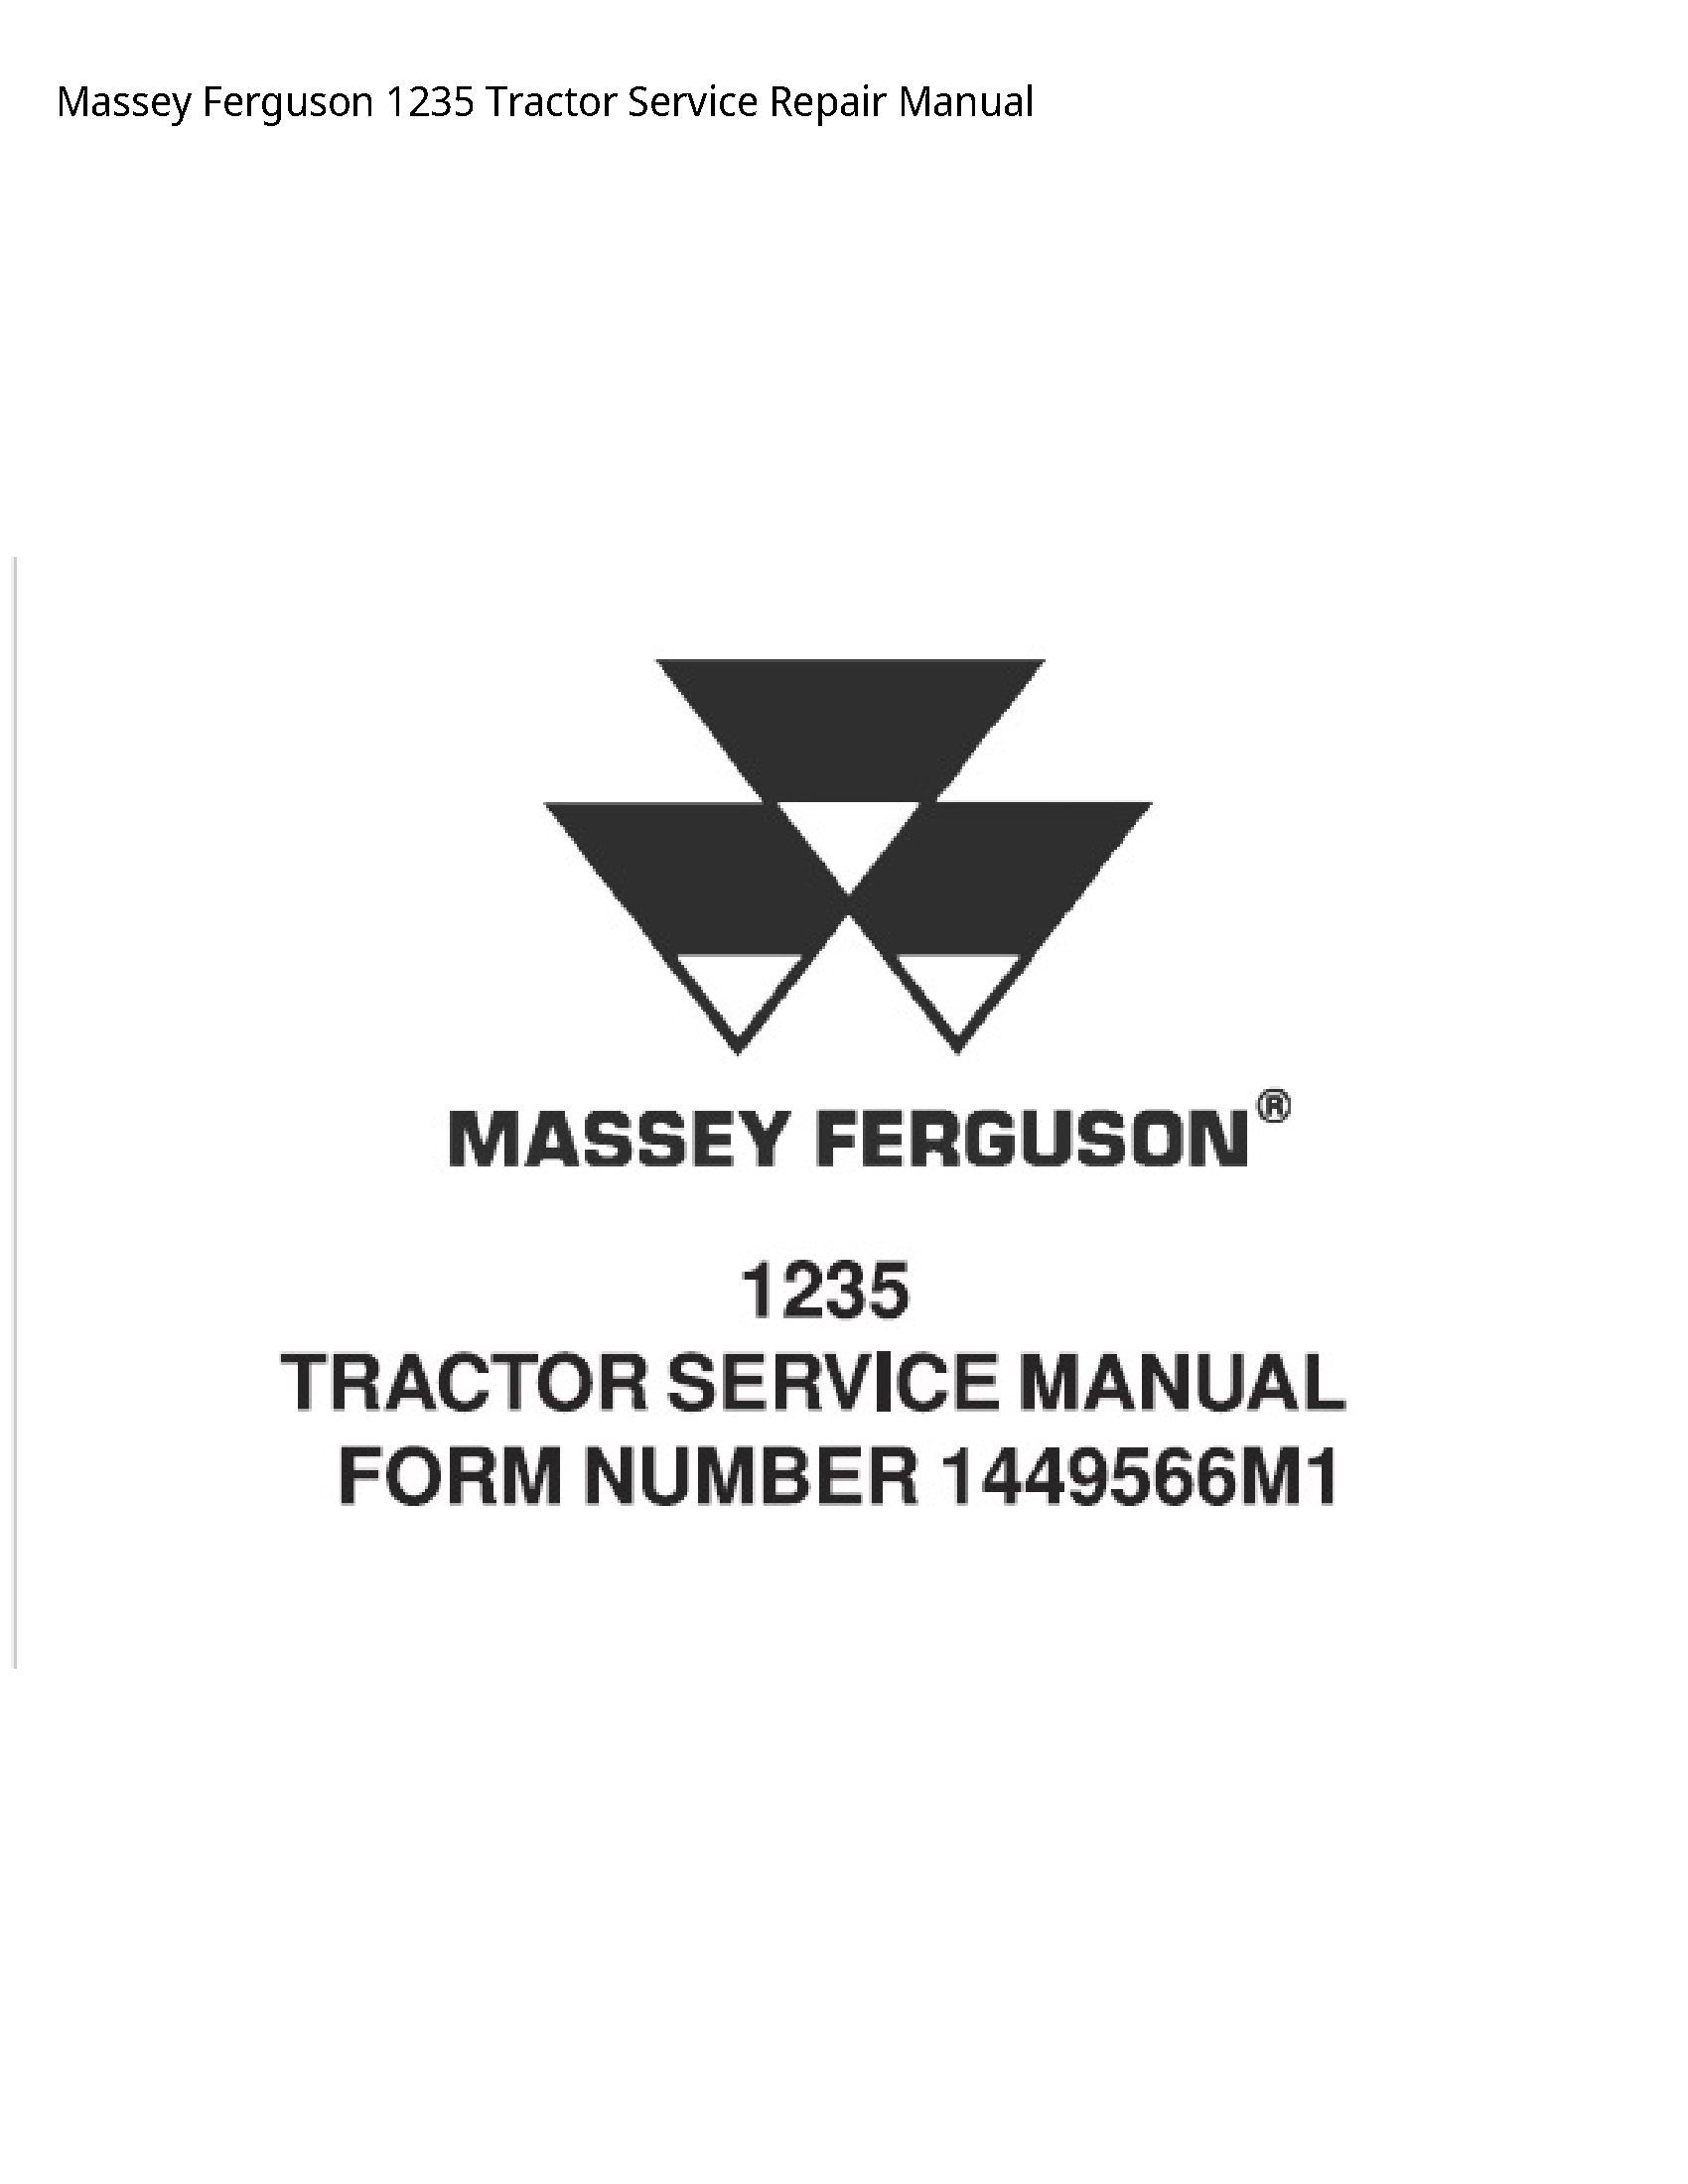 Massey Ferguson 1235 Tractor manual